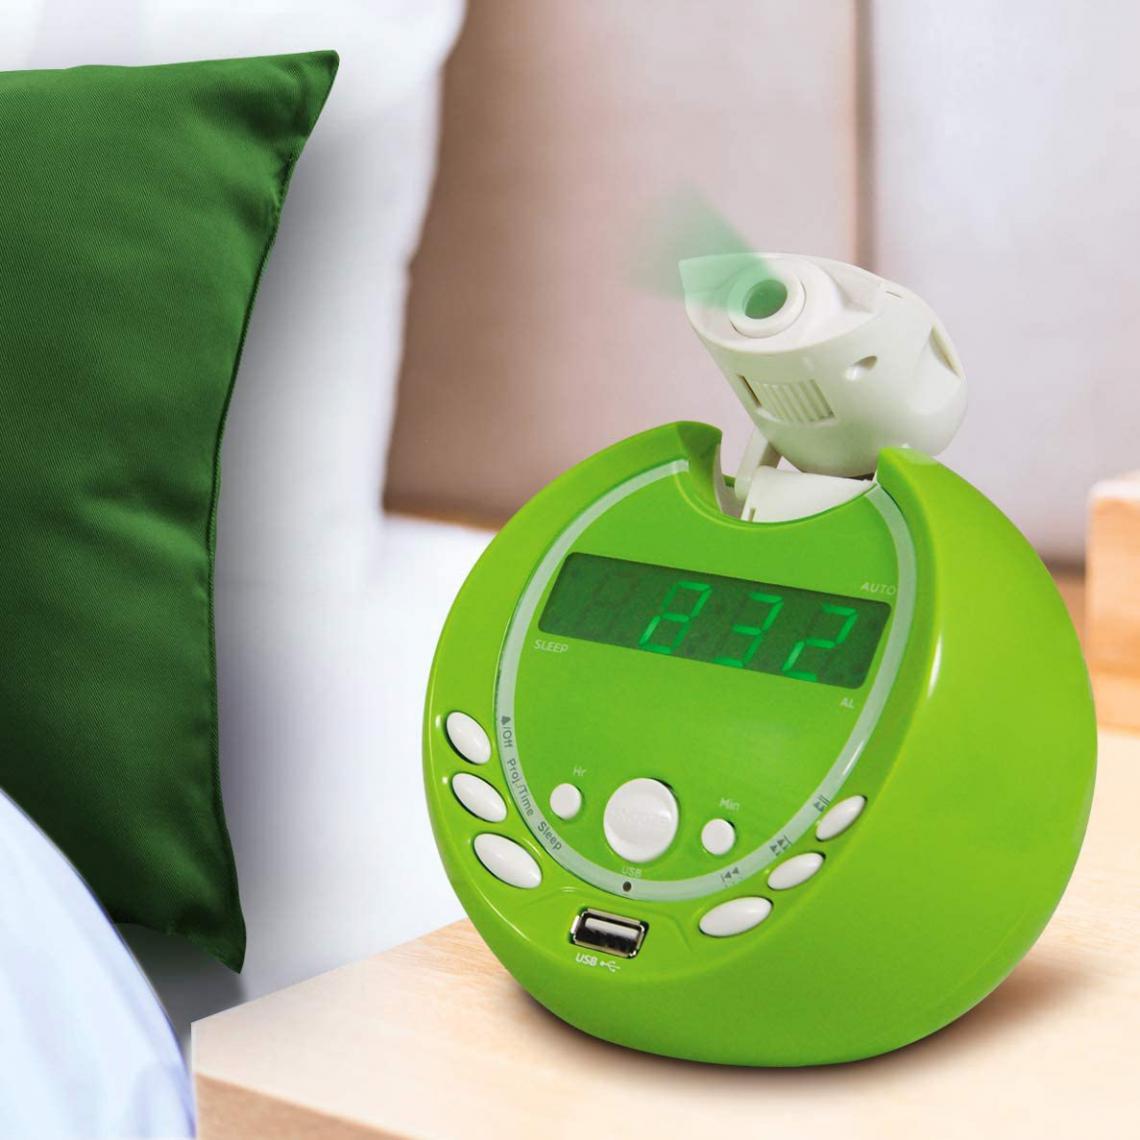 Metronic - radio Réveil Gulli MP3 USB avec projection de l'heure et alarme vert - Radio